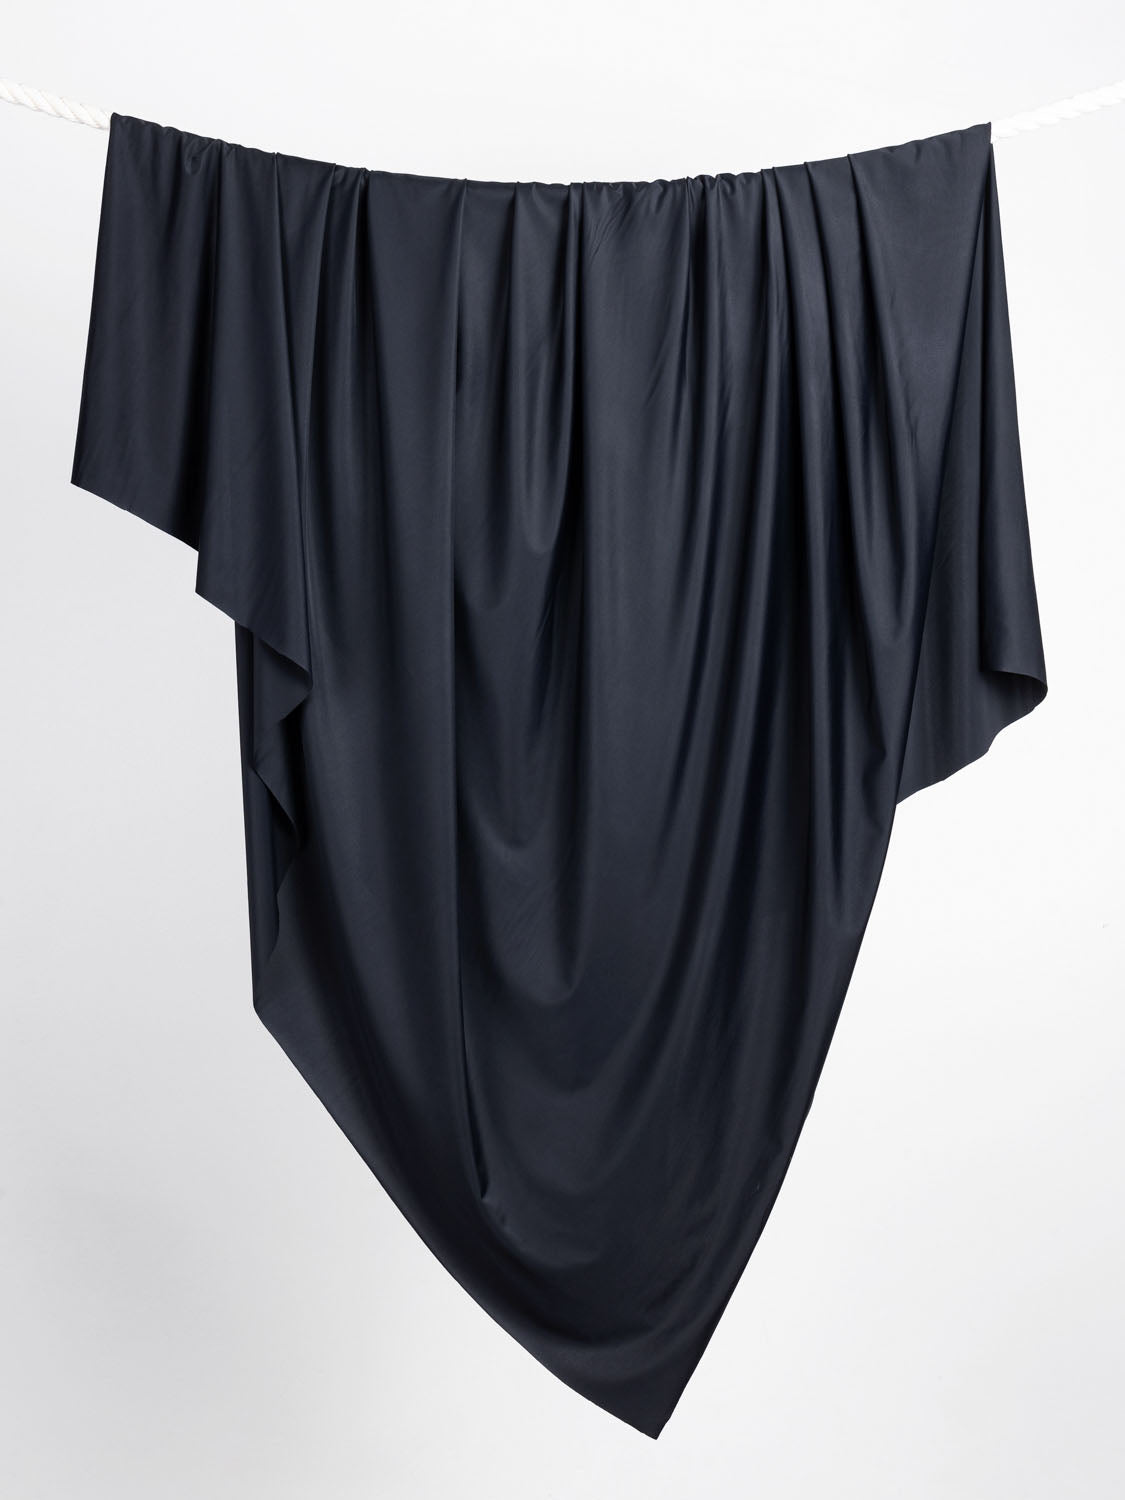 Sportswear Fabric - Polyamide Elastane 220gsm - Stretch - BLACK, 140cm x  1m, per piece (seconds)